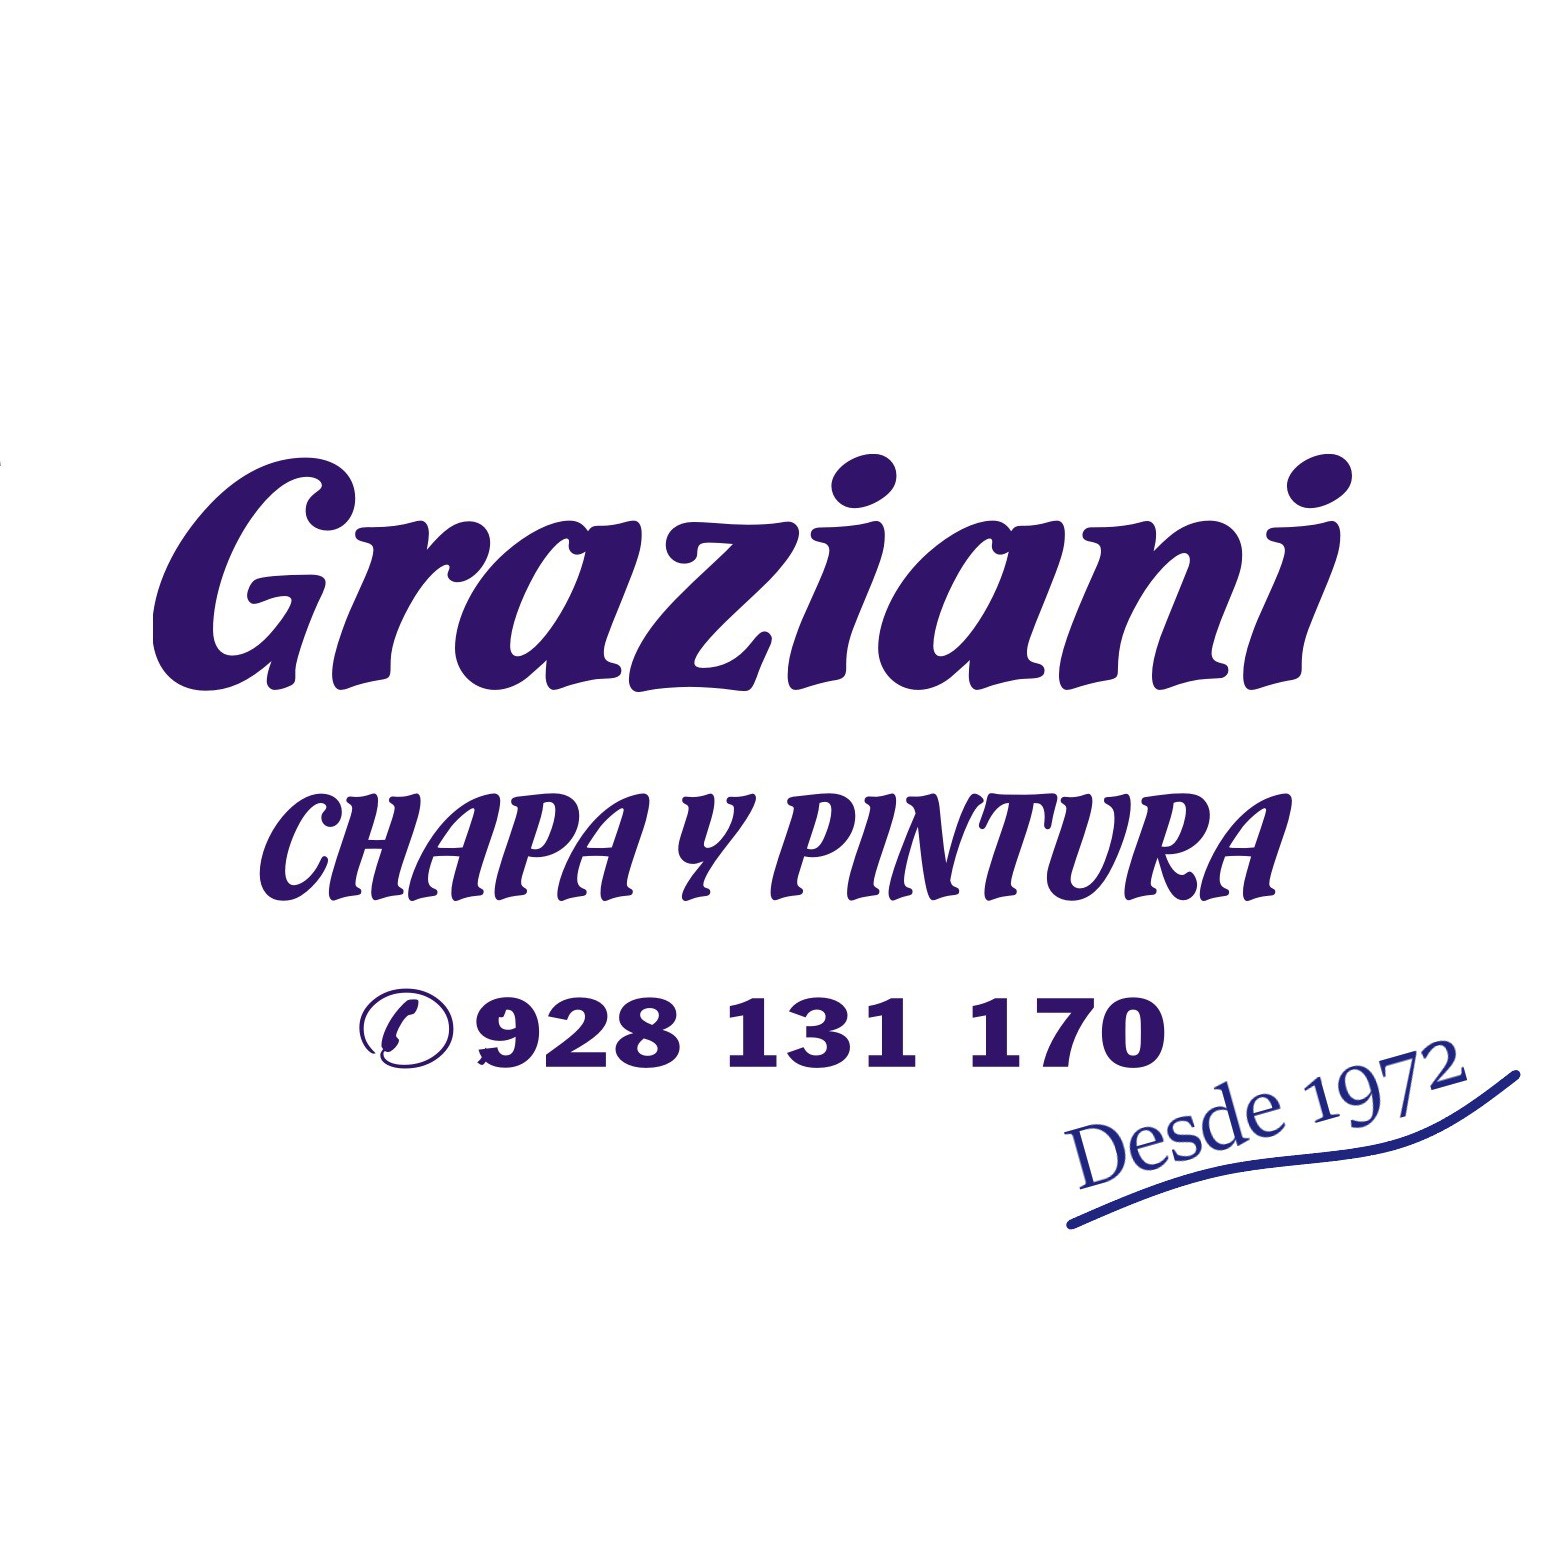 Taller Graziani Chapa y Pintura Logo